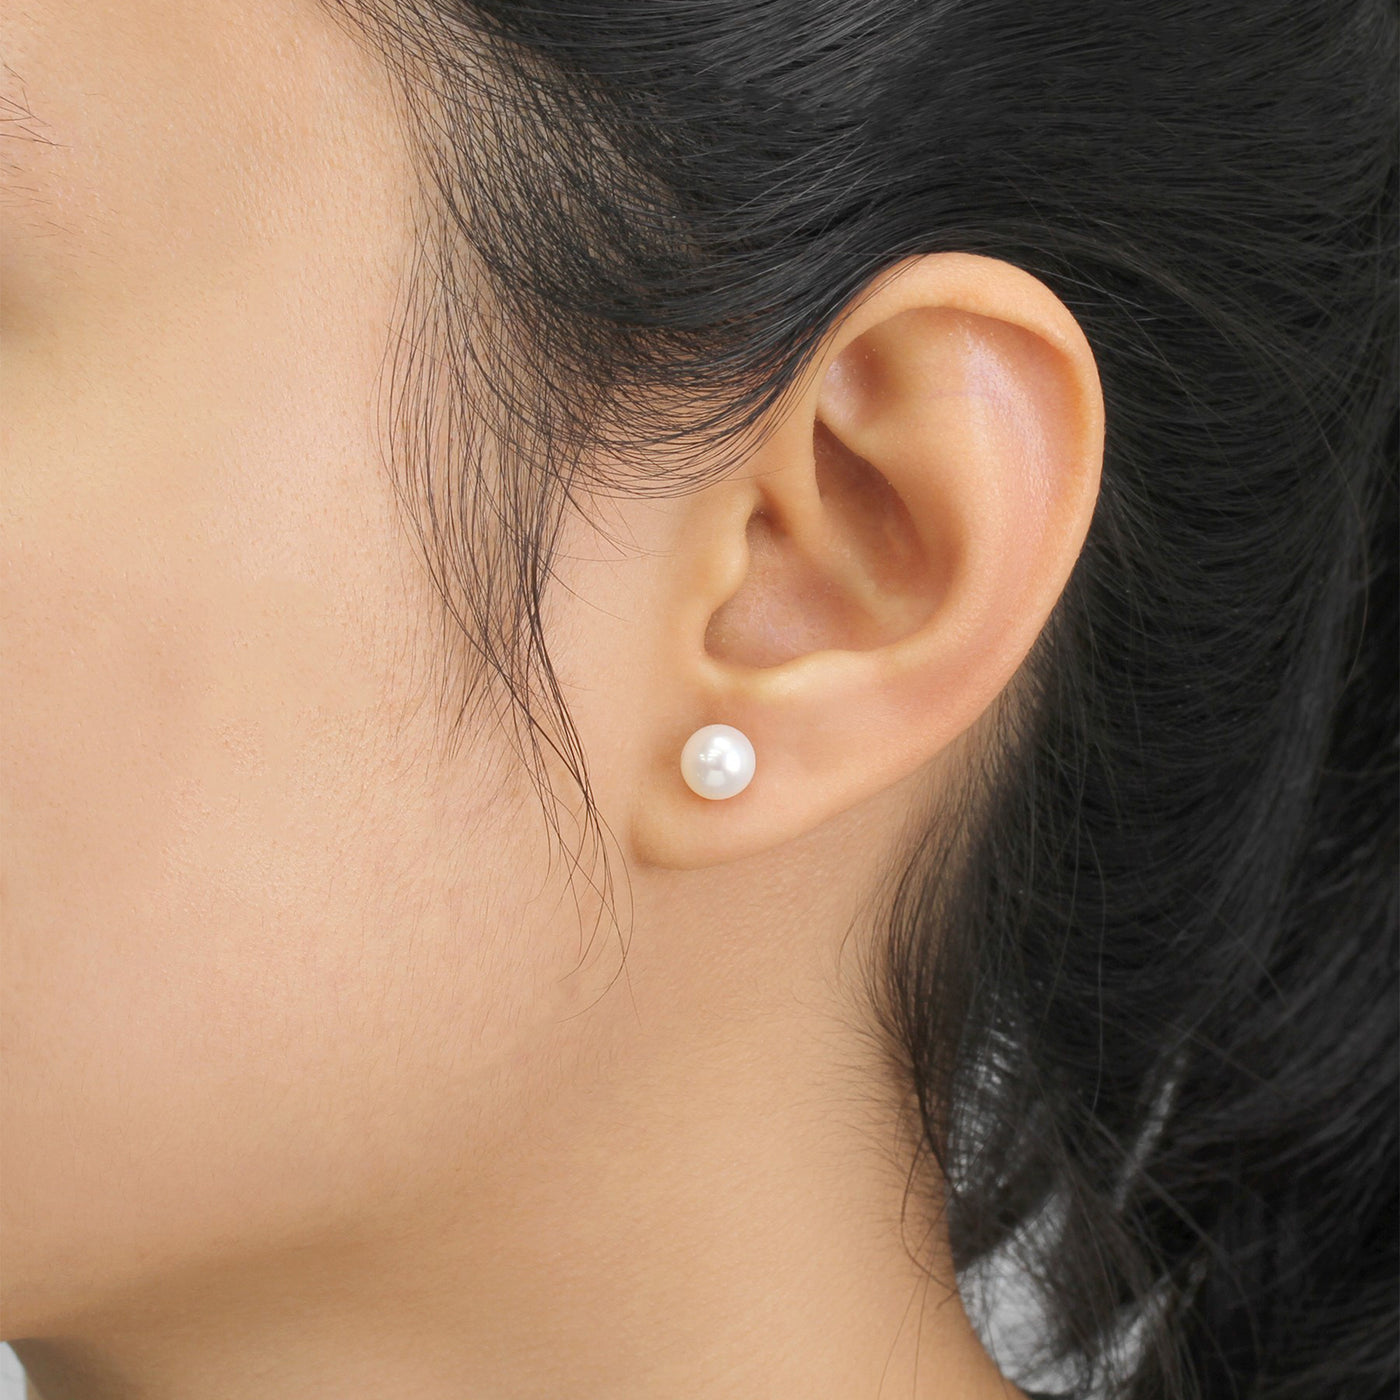 Cultured Freshwater Pearl Earrings, Studs Cartilage Earrings, Solid 14K Gold